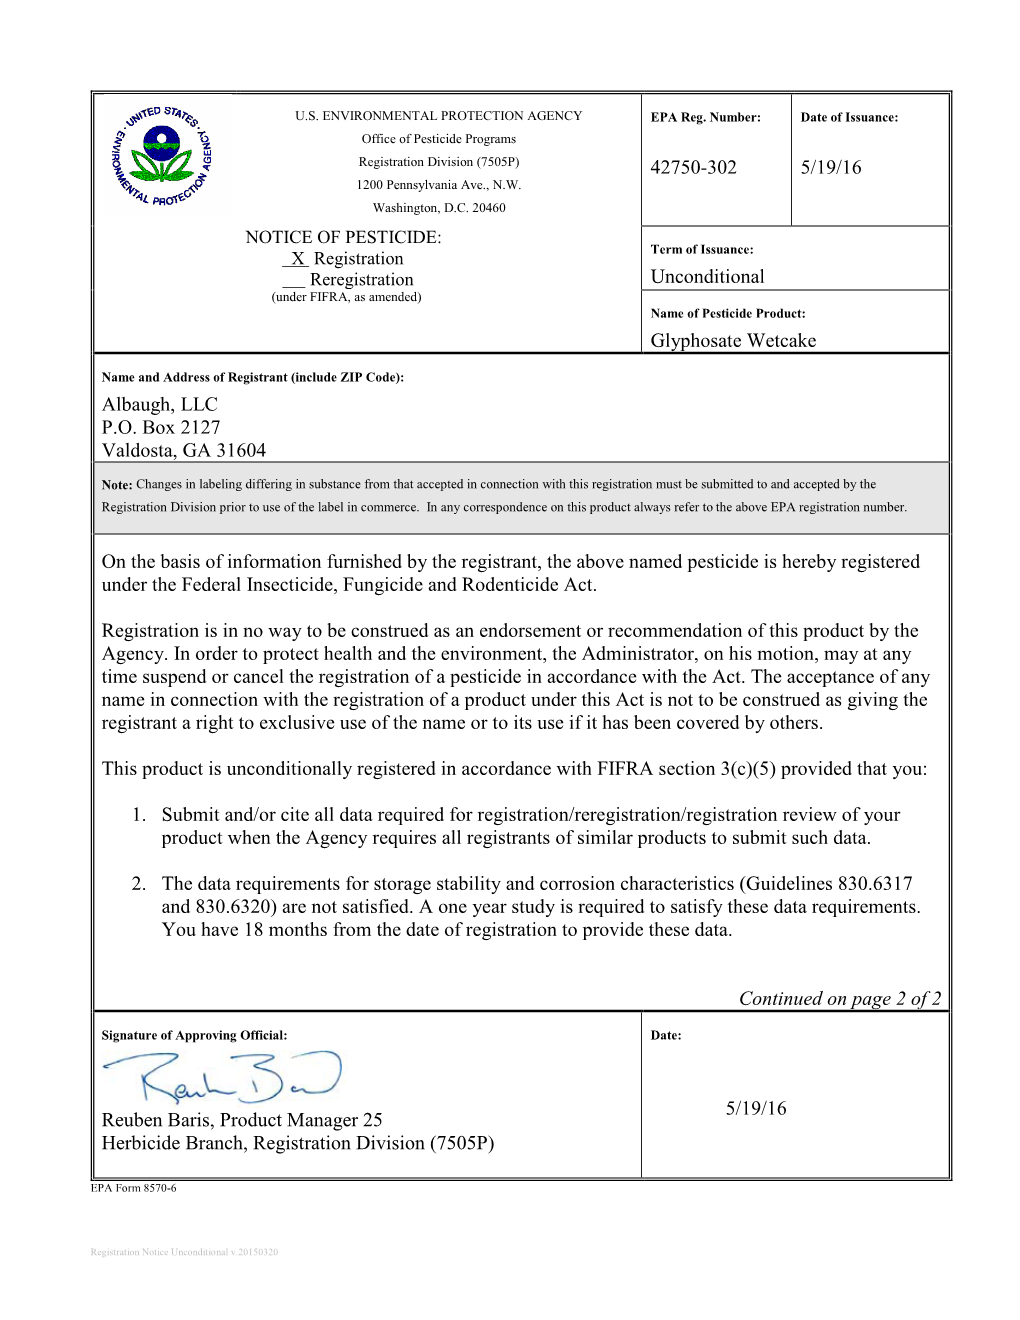 US EPA, Pesticide Product Label, GLYPHOSATE WETCAKE,05/19